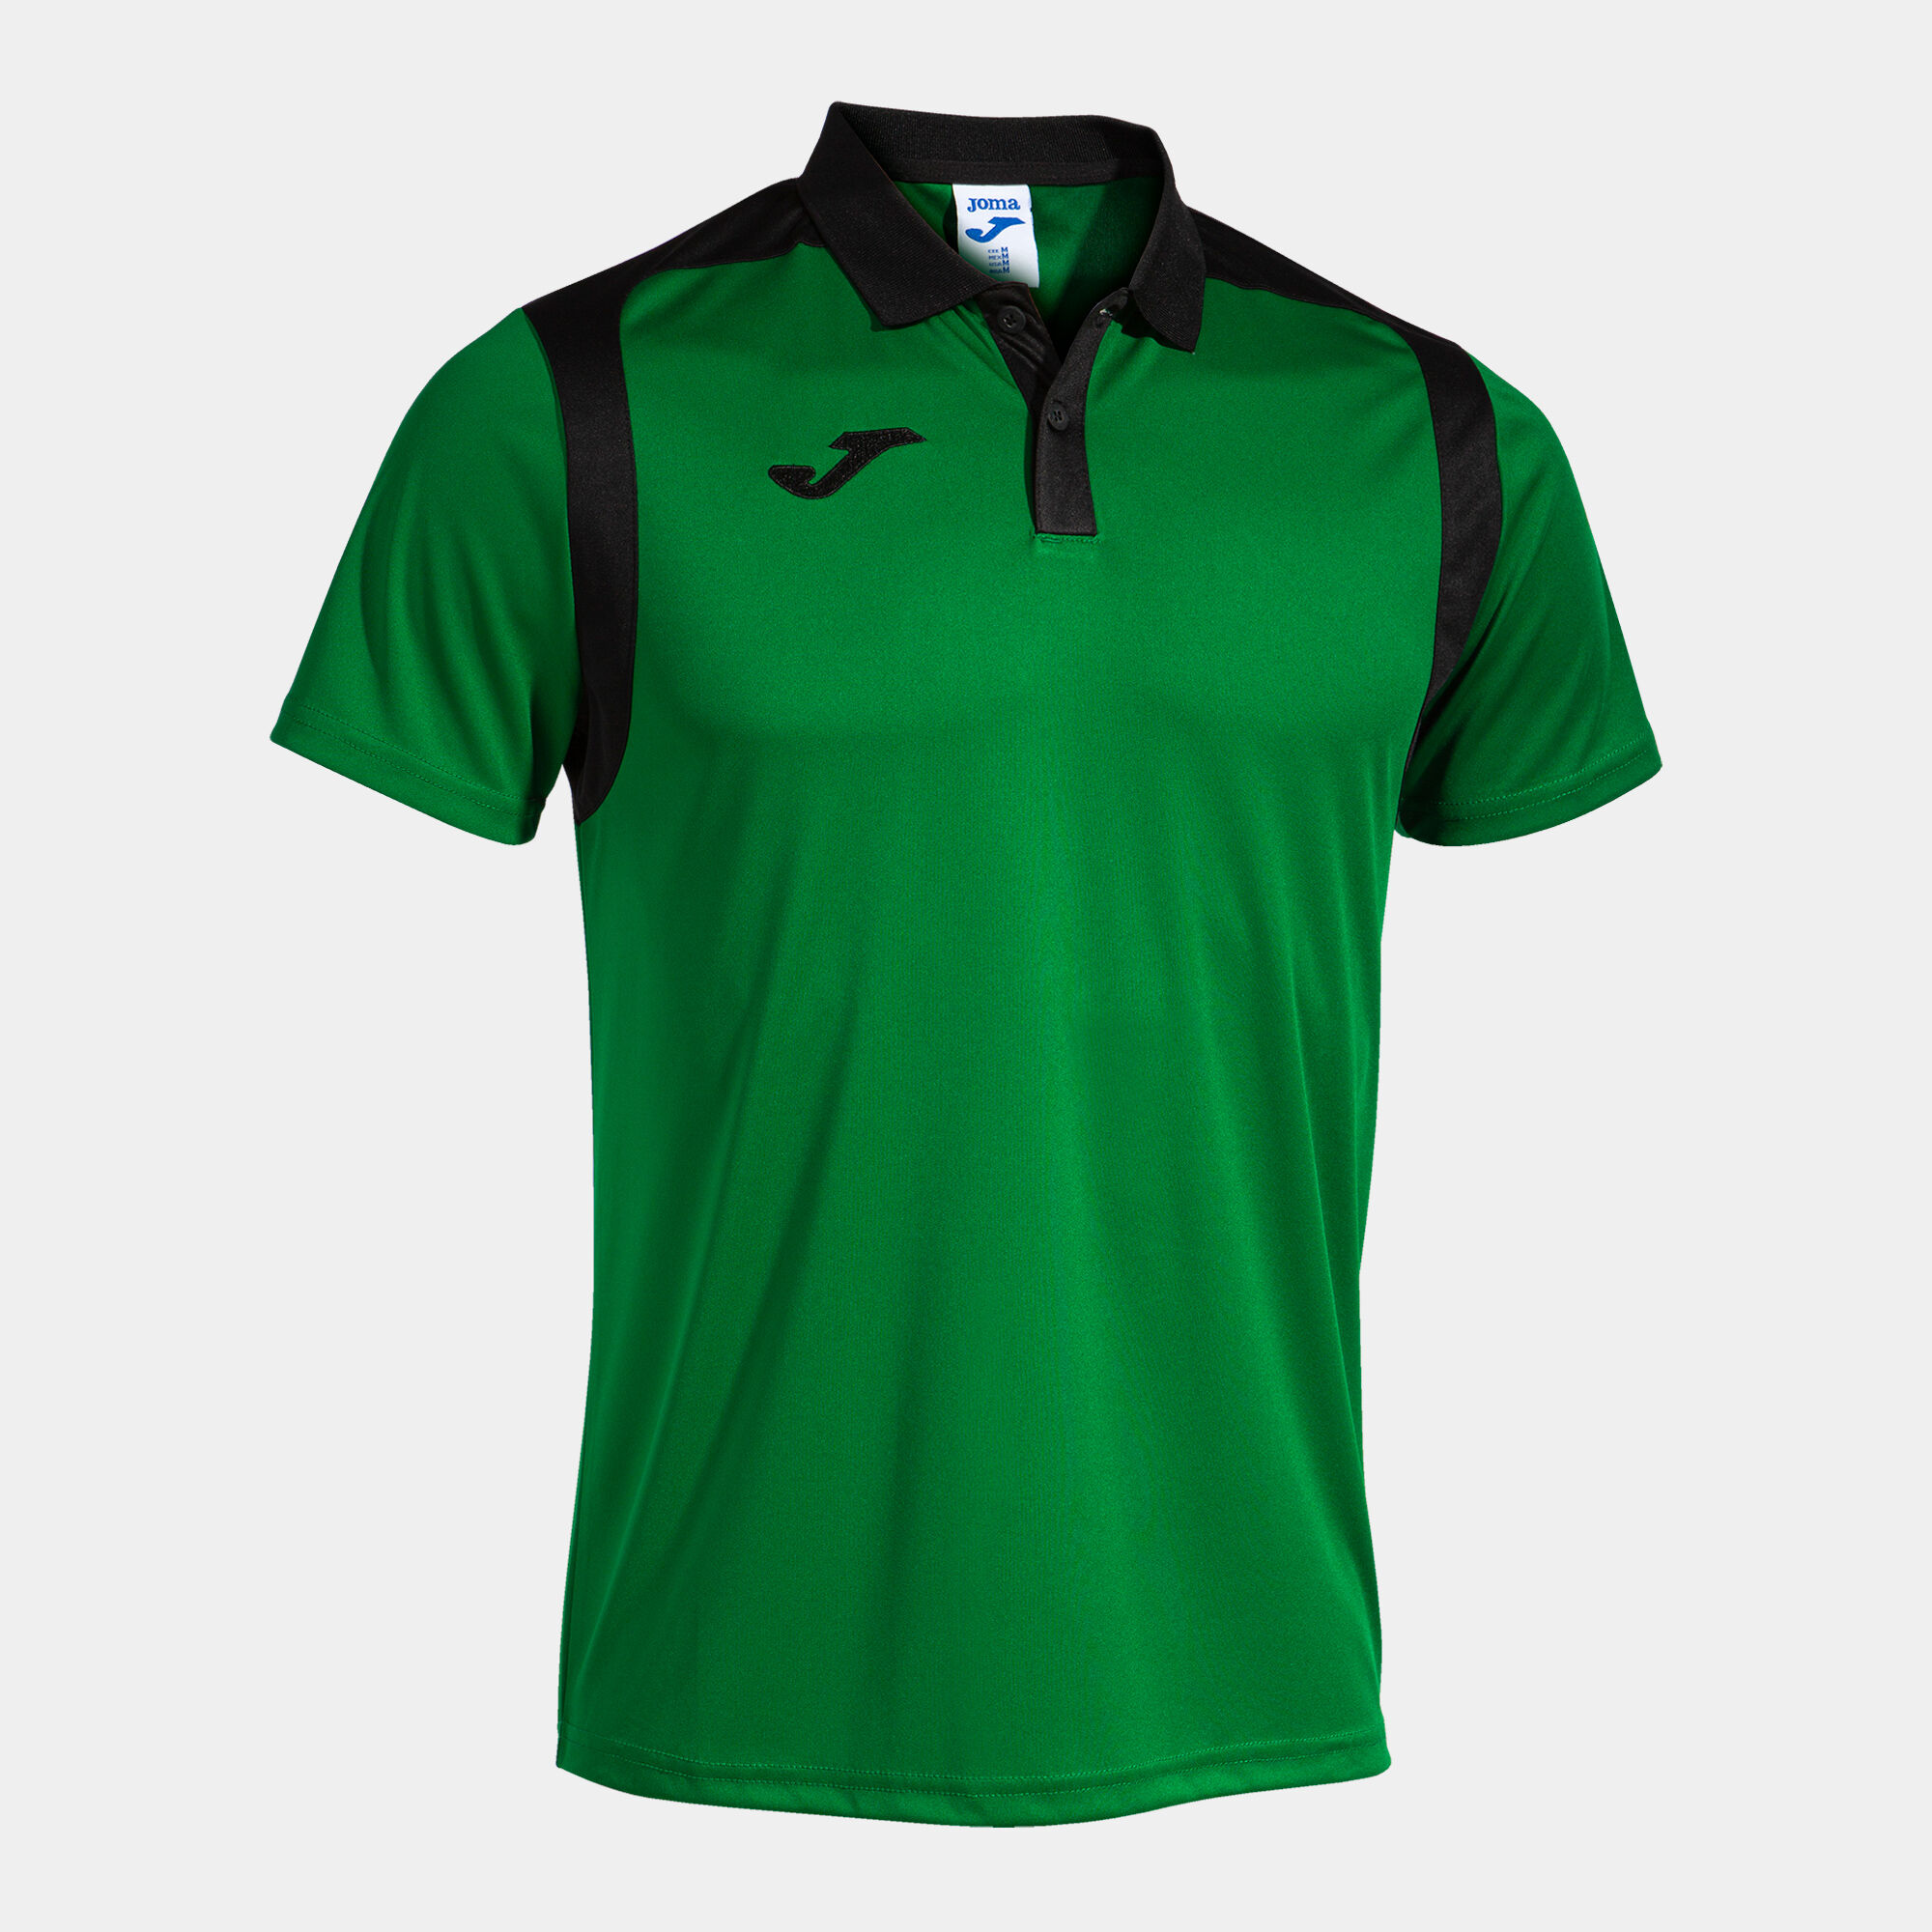 Polo shirt short-sleeve man Championship V green black